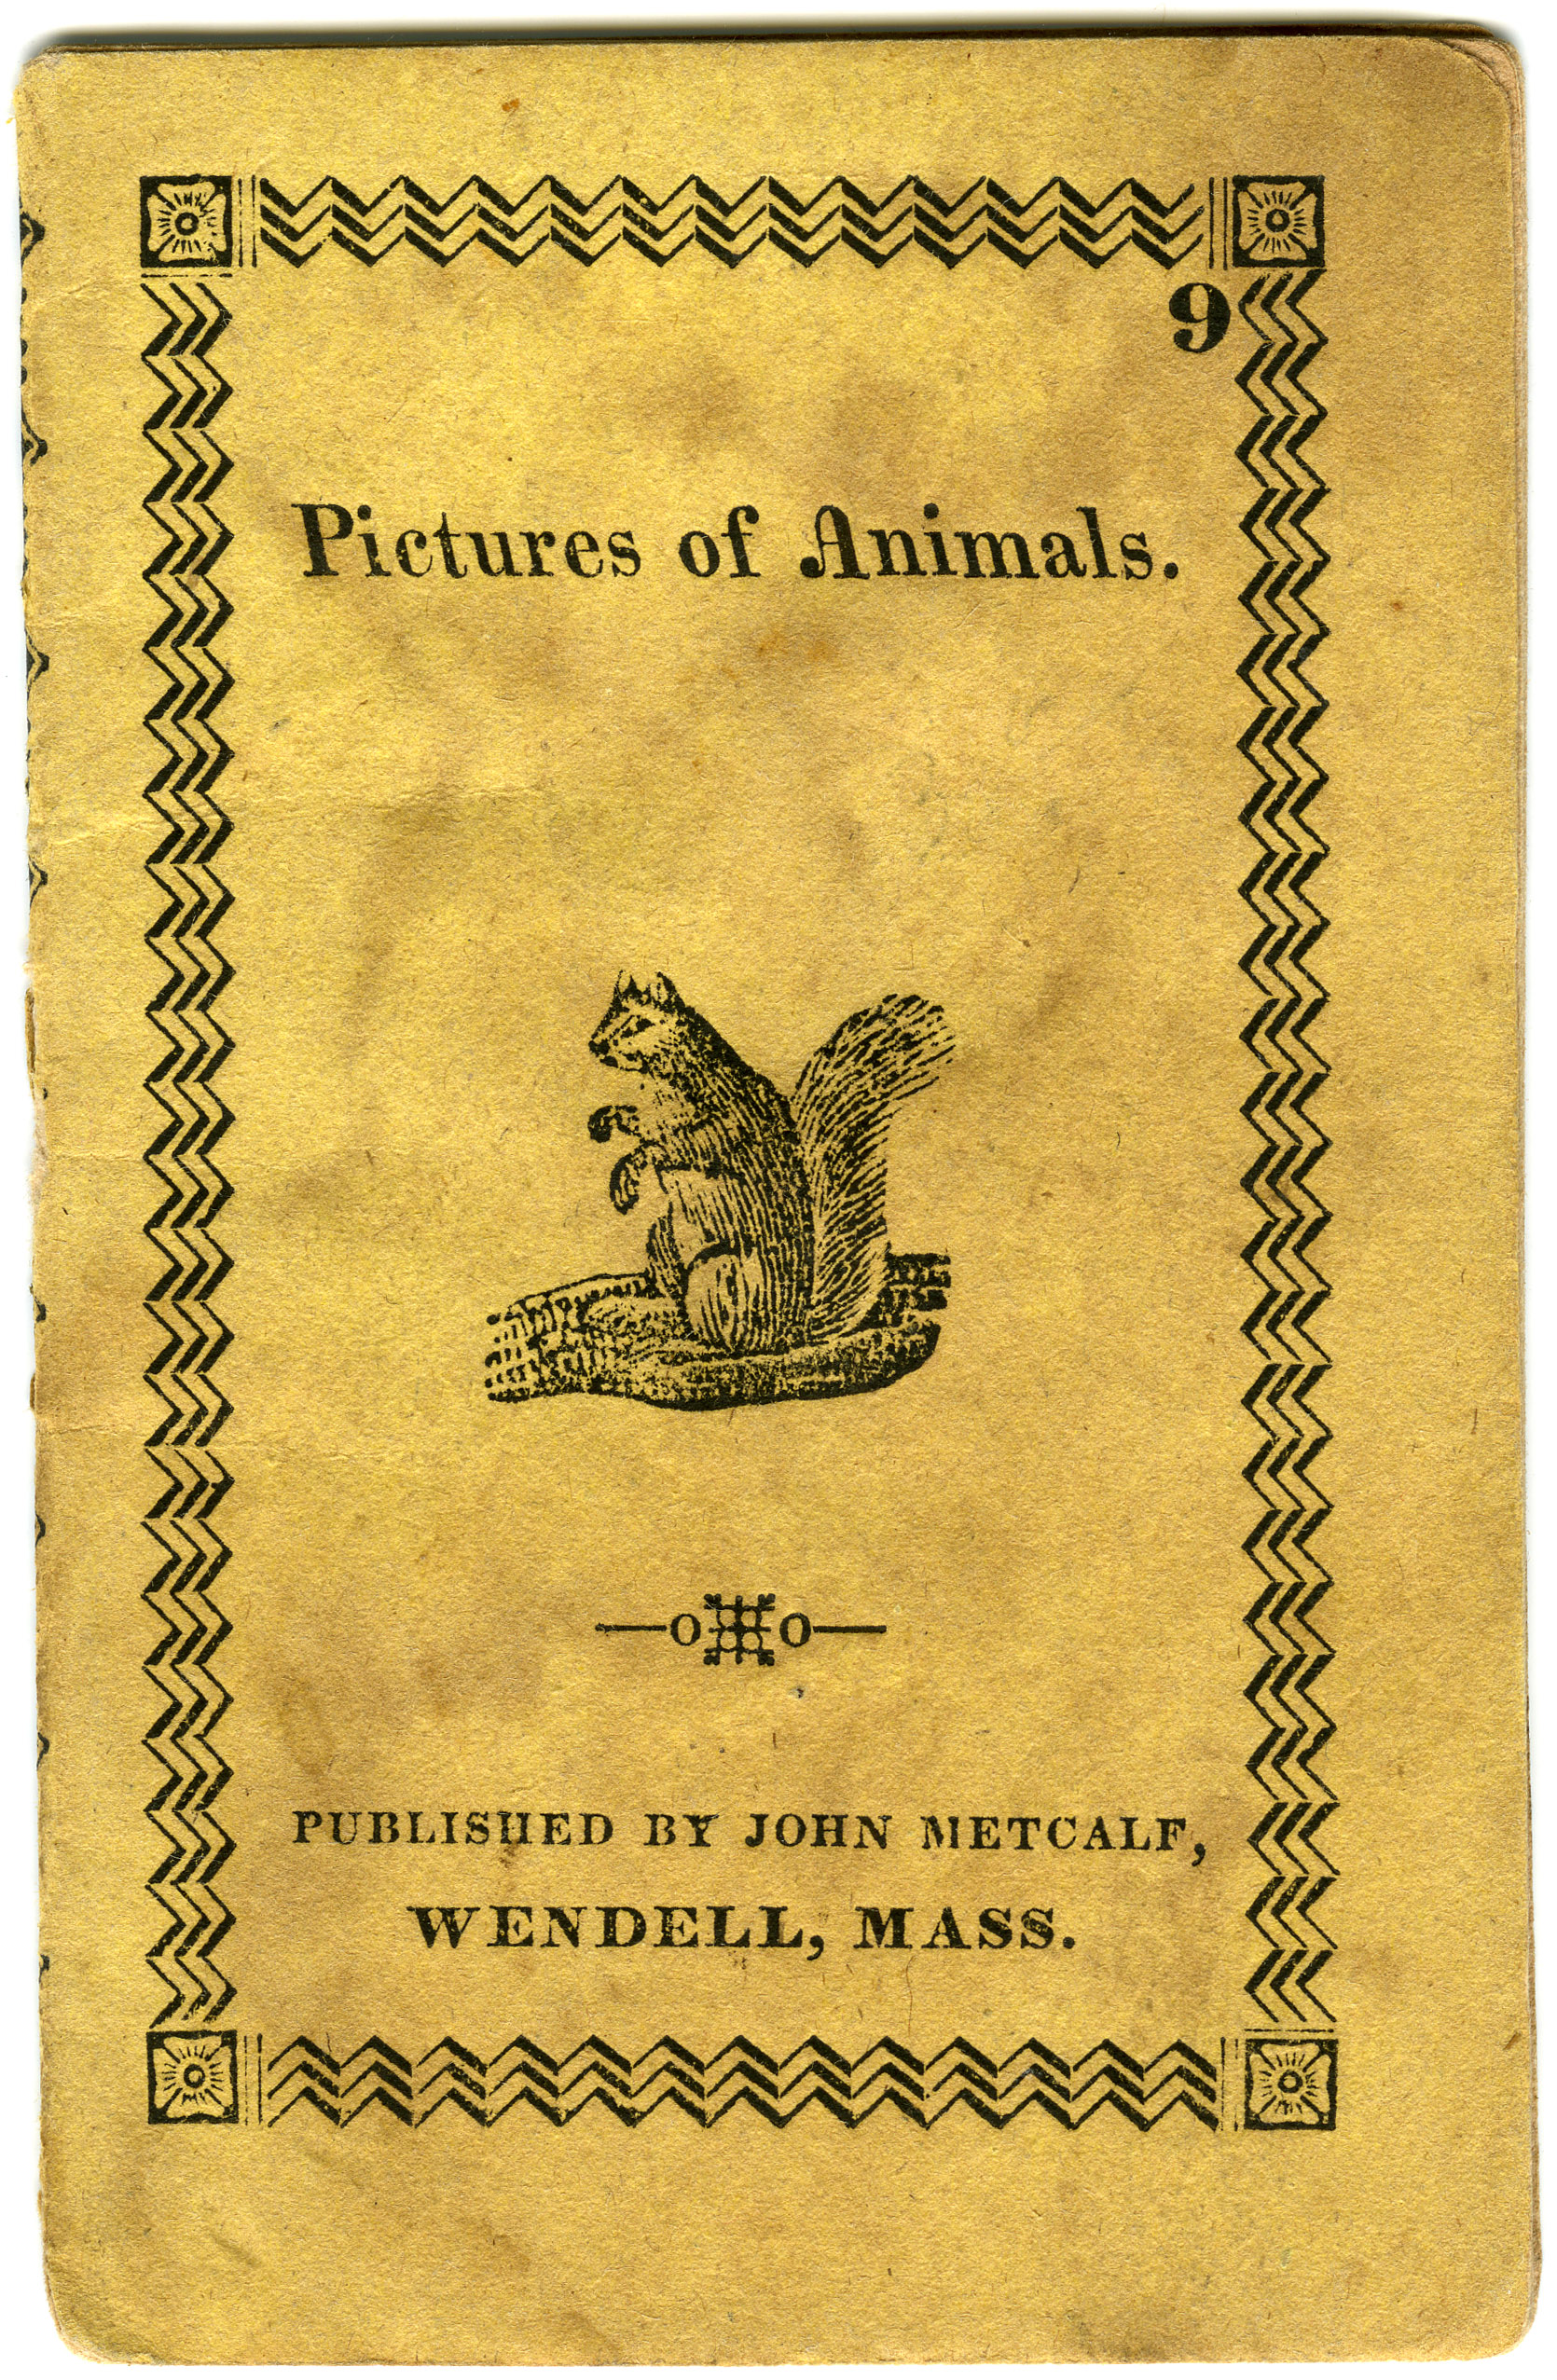 John Metcalf's Pictures of animals